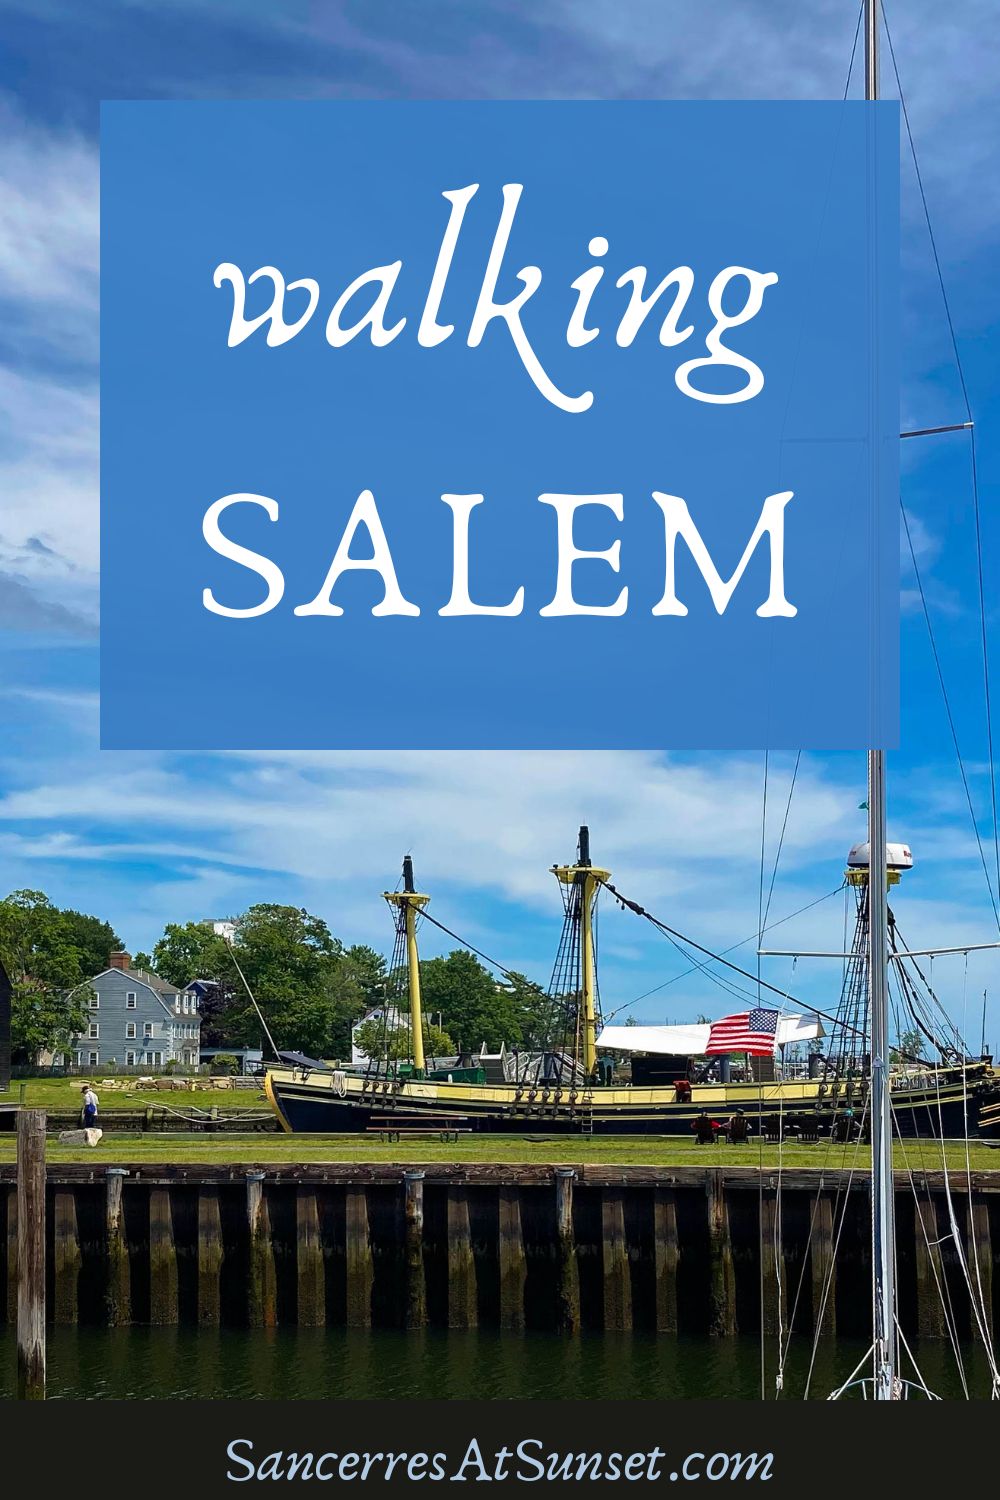 Walking Salem